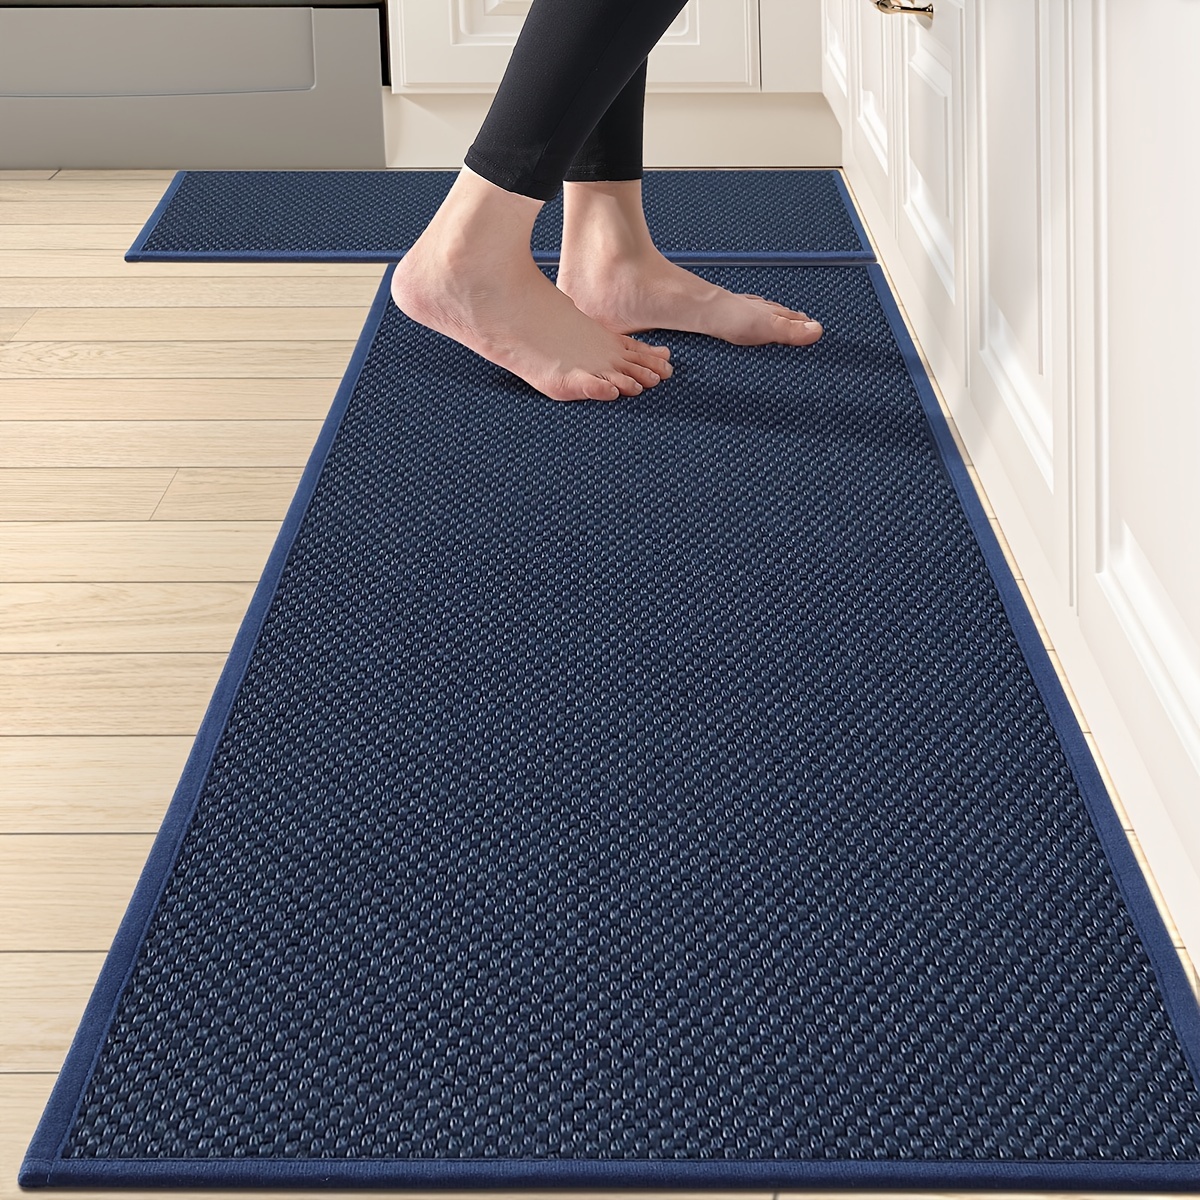 Tapetes de cocina de goma antideslizantes – Tejido de yute largo para  pasillo, alfombras absorbentes para fregadero de cocina, alfombras  impermeables